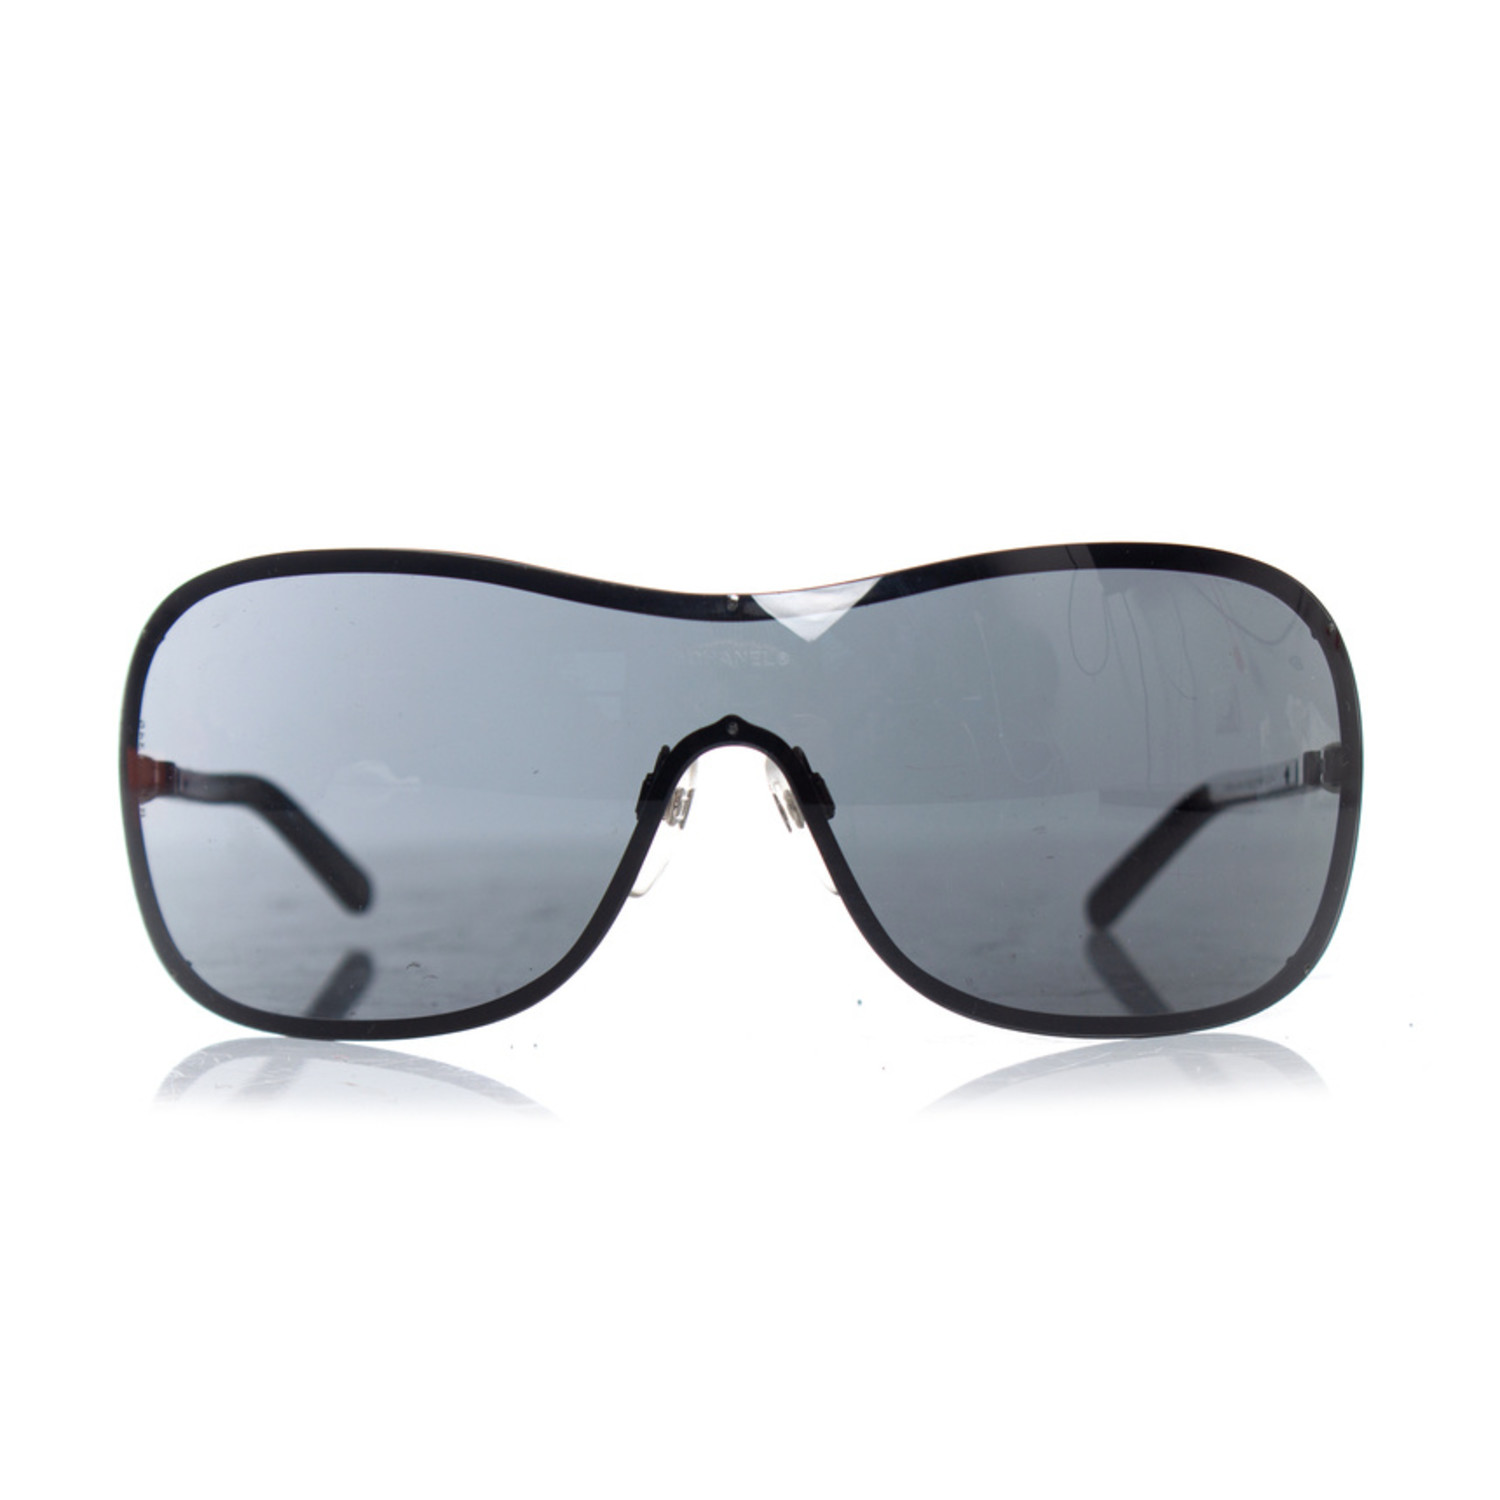 Authentic Black Chanel 4170-H Shield Sunglasses